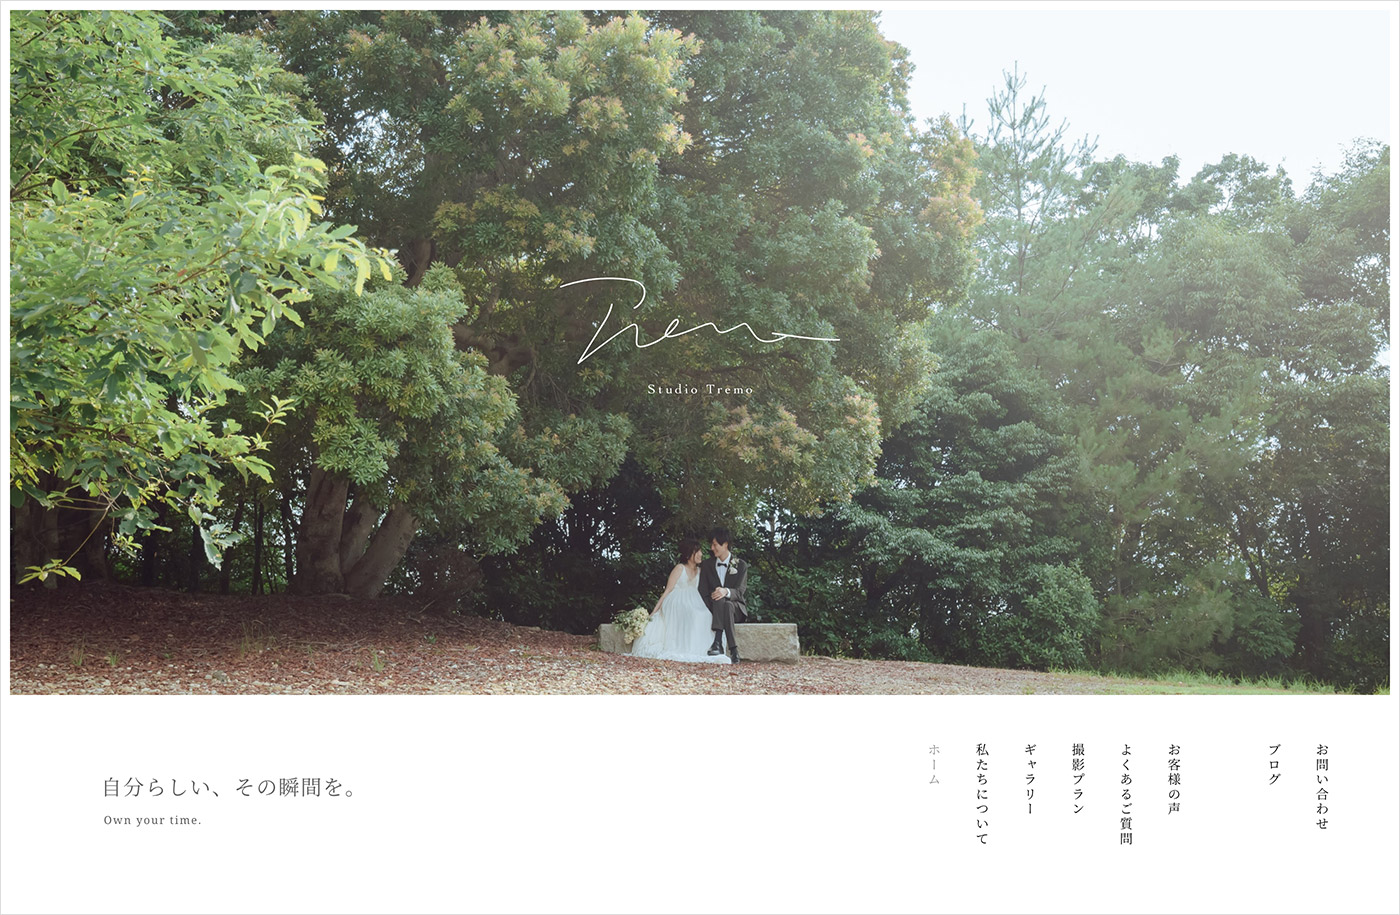 Studio Tremo | 大阪・京都・福岡を拠点に、結婚式、家族の写真撮影を行っています。ウェブサイトの画面キャプチャ画像